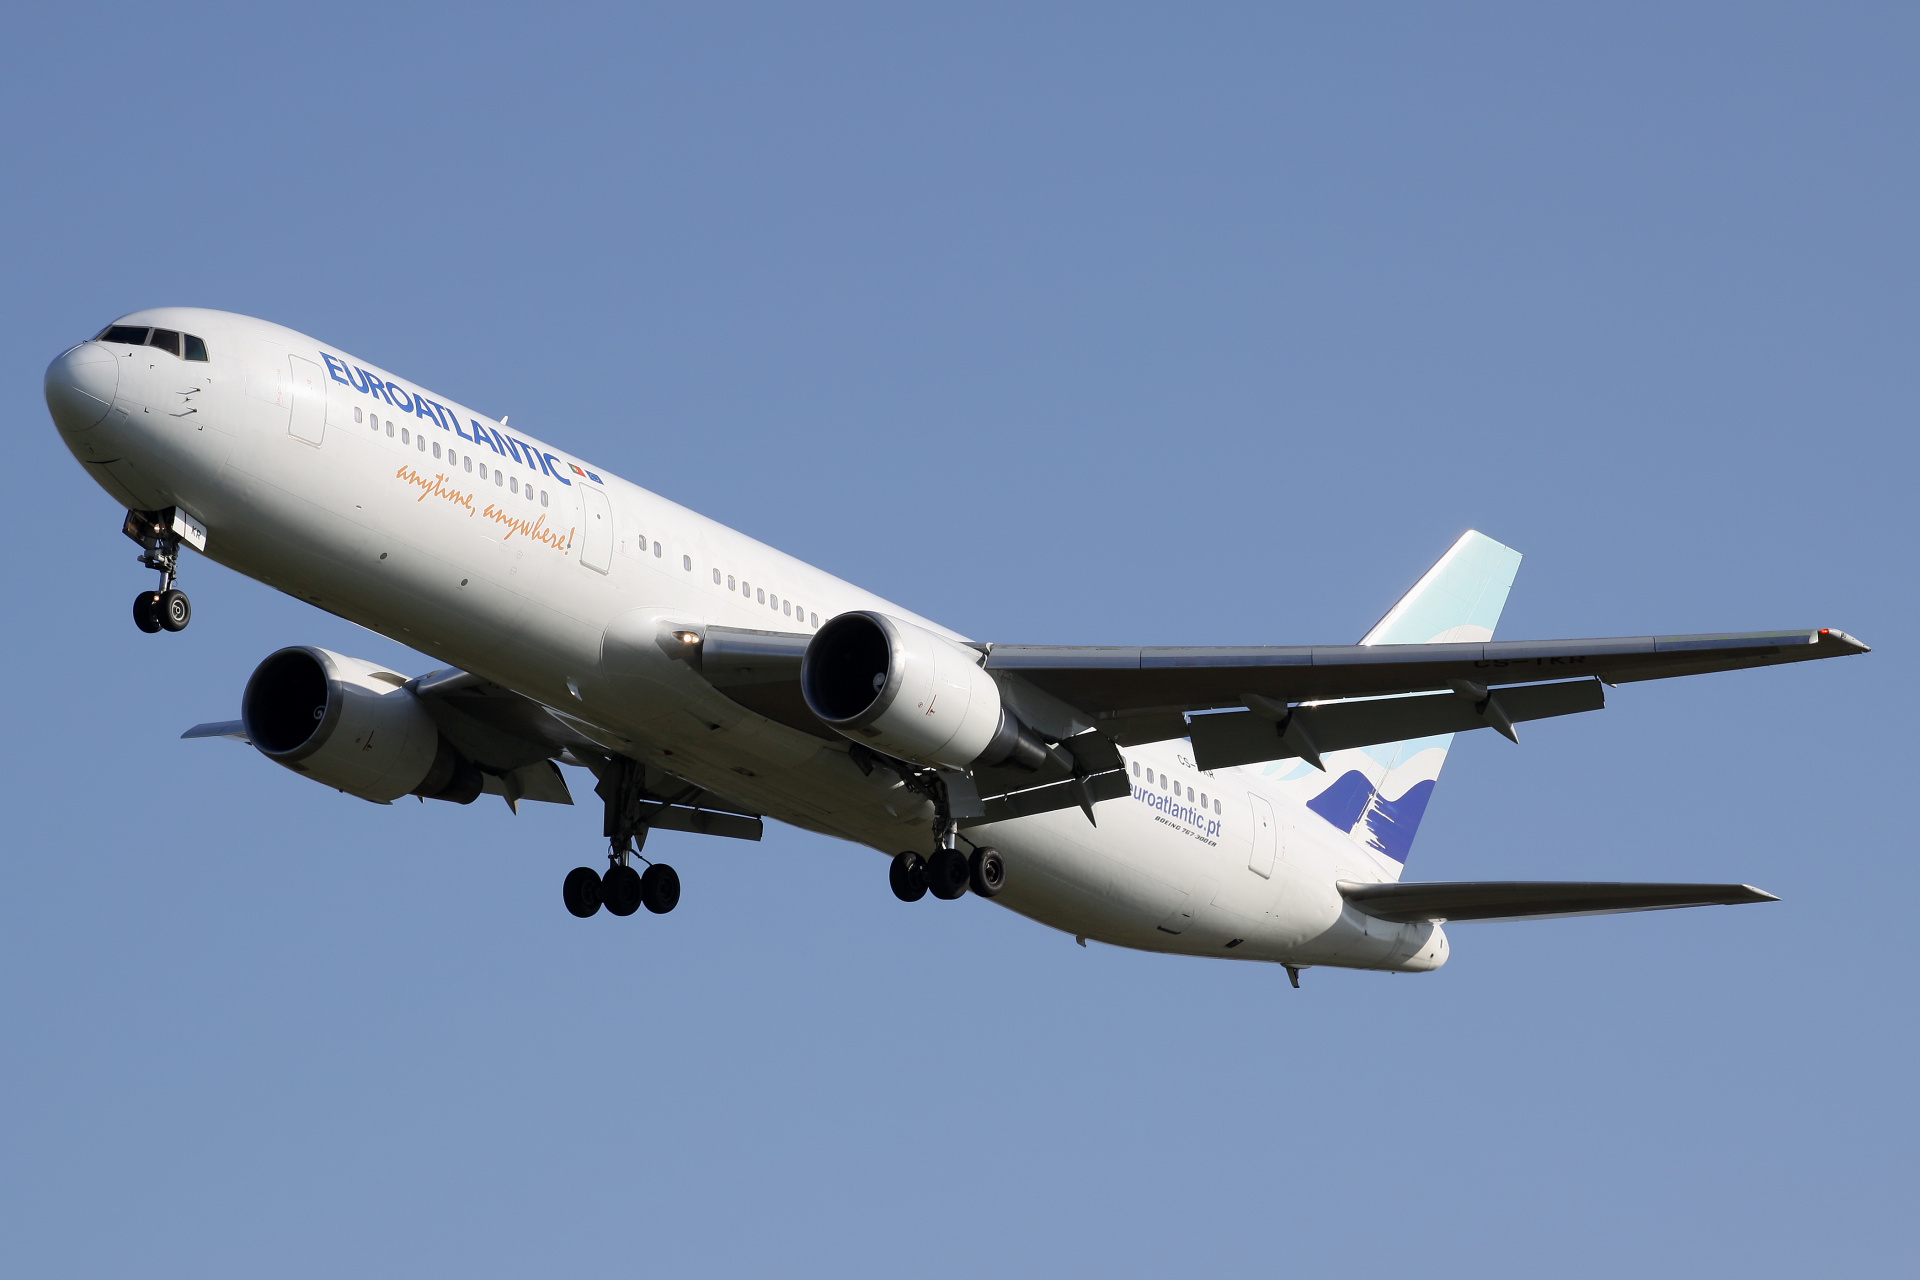 CS-TKR (Aircraft » EPWA Spotting » Boeing 767-300 » EuroAtlantic Airways)